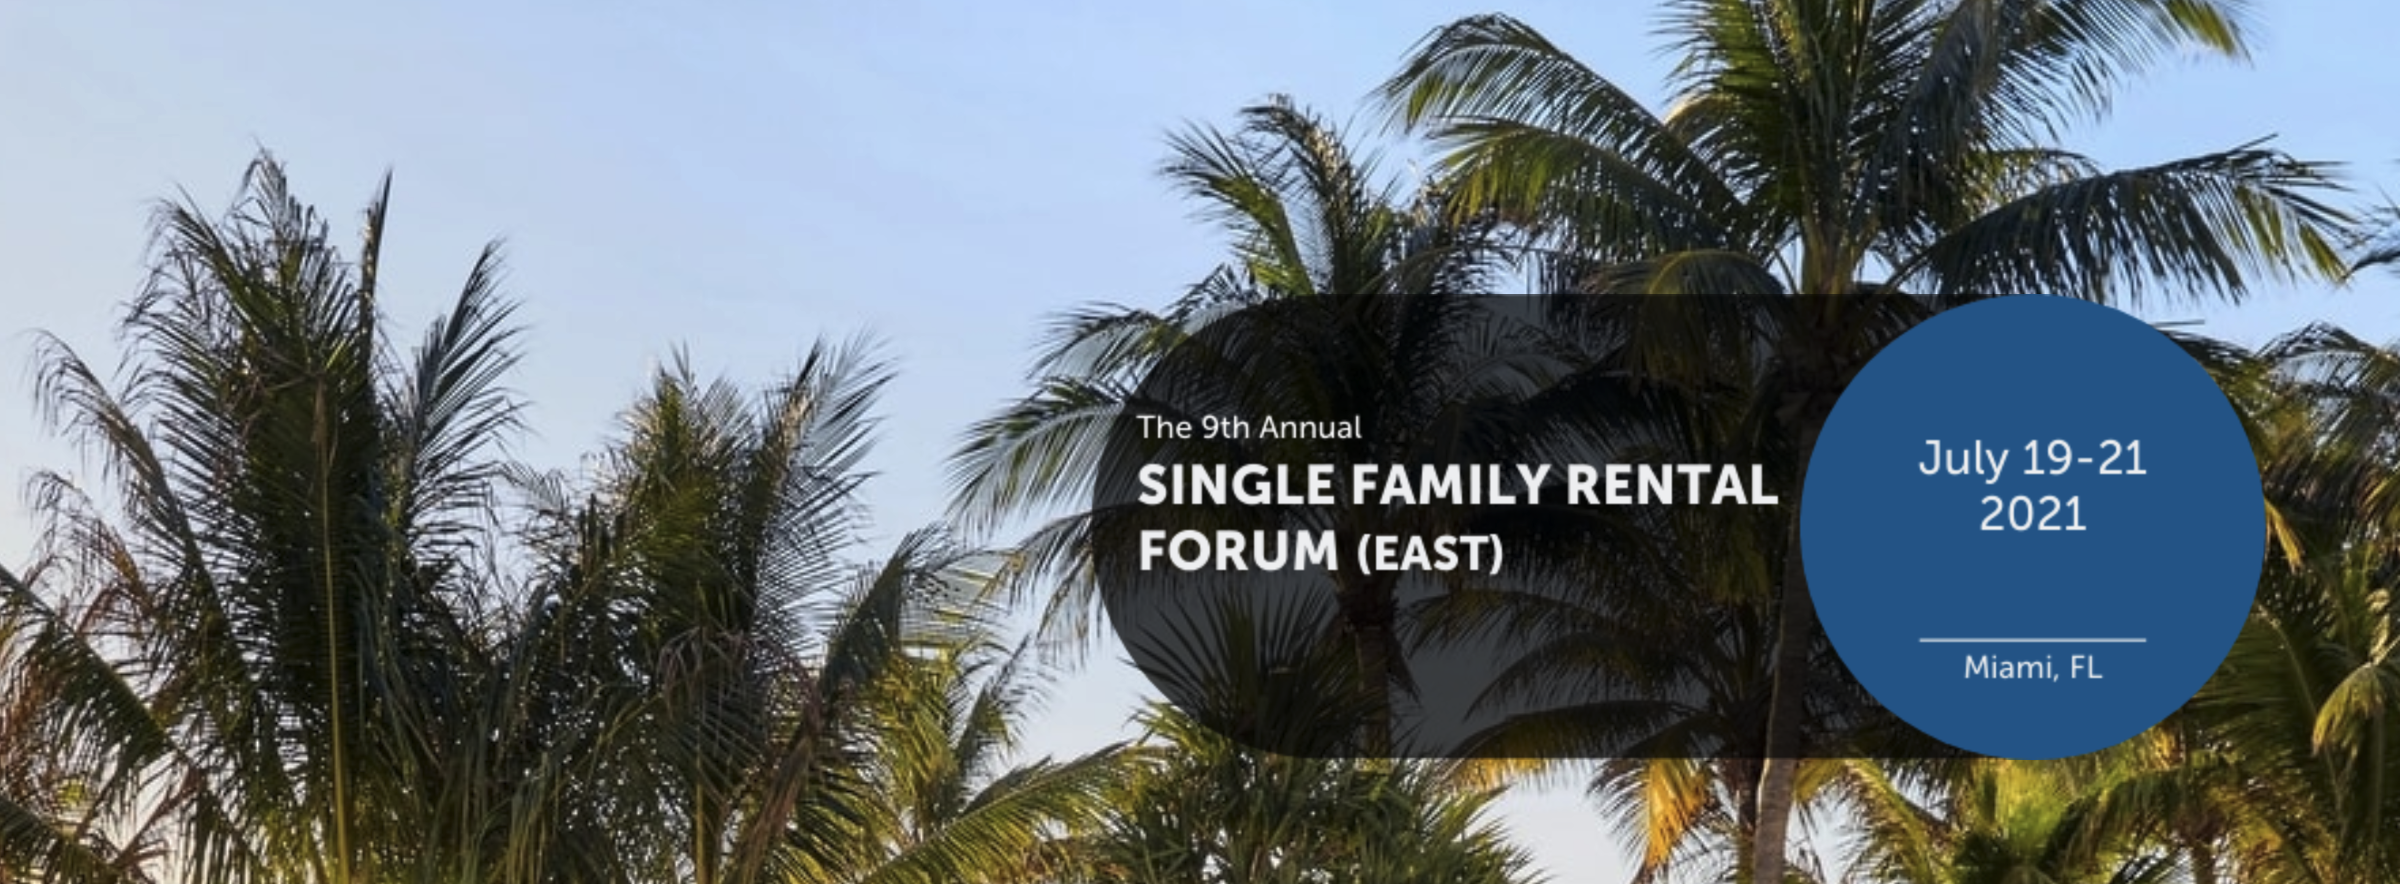 2021 Single Family Rental Forum East